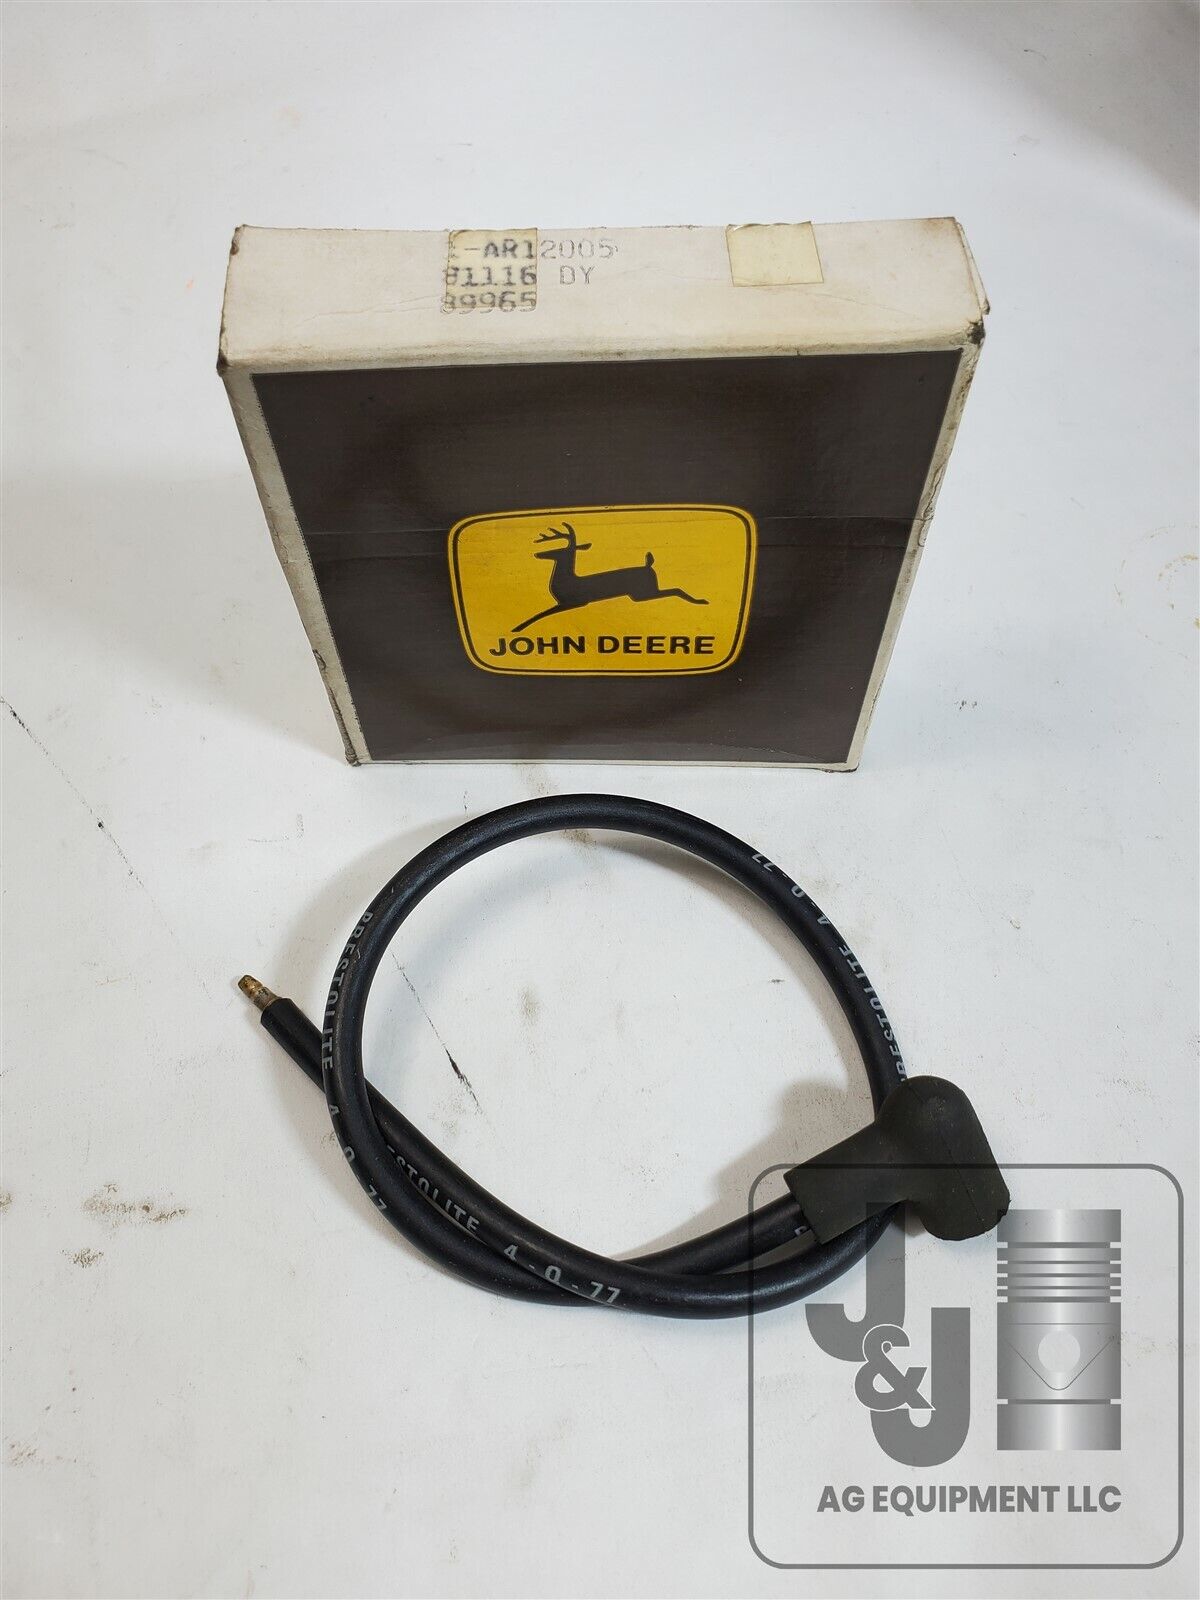 Genuine John Deere Pony Motor Spark Plug Cable AR12005 70D 720D 730D 80 820 830